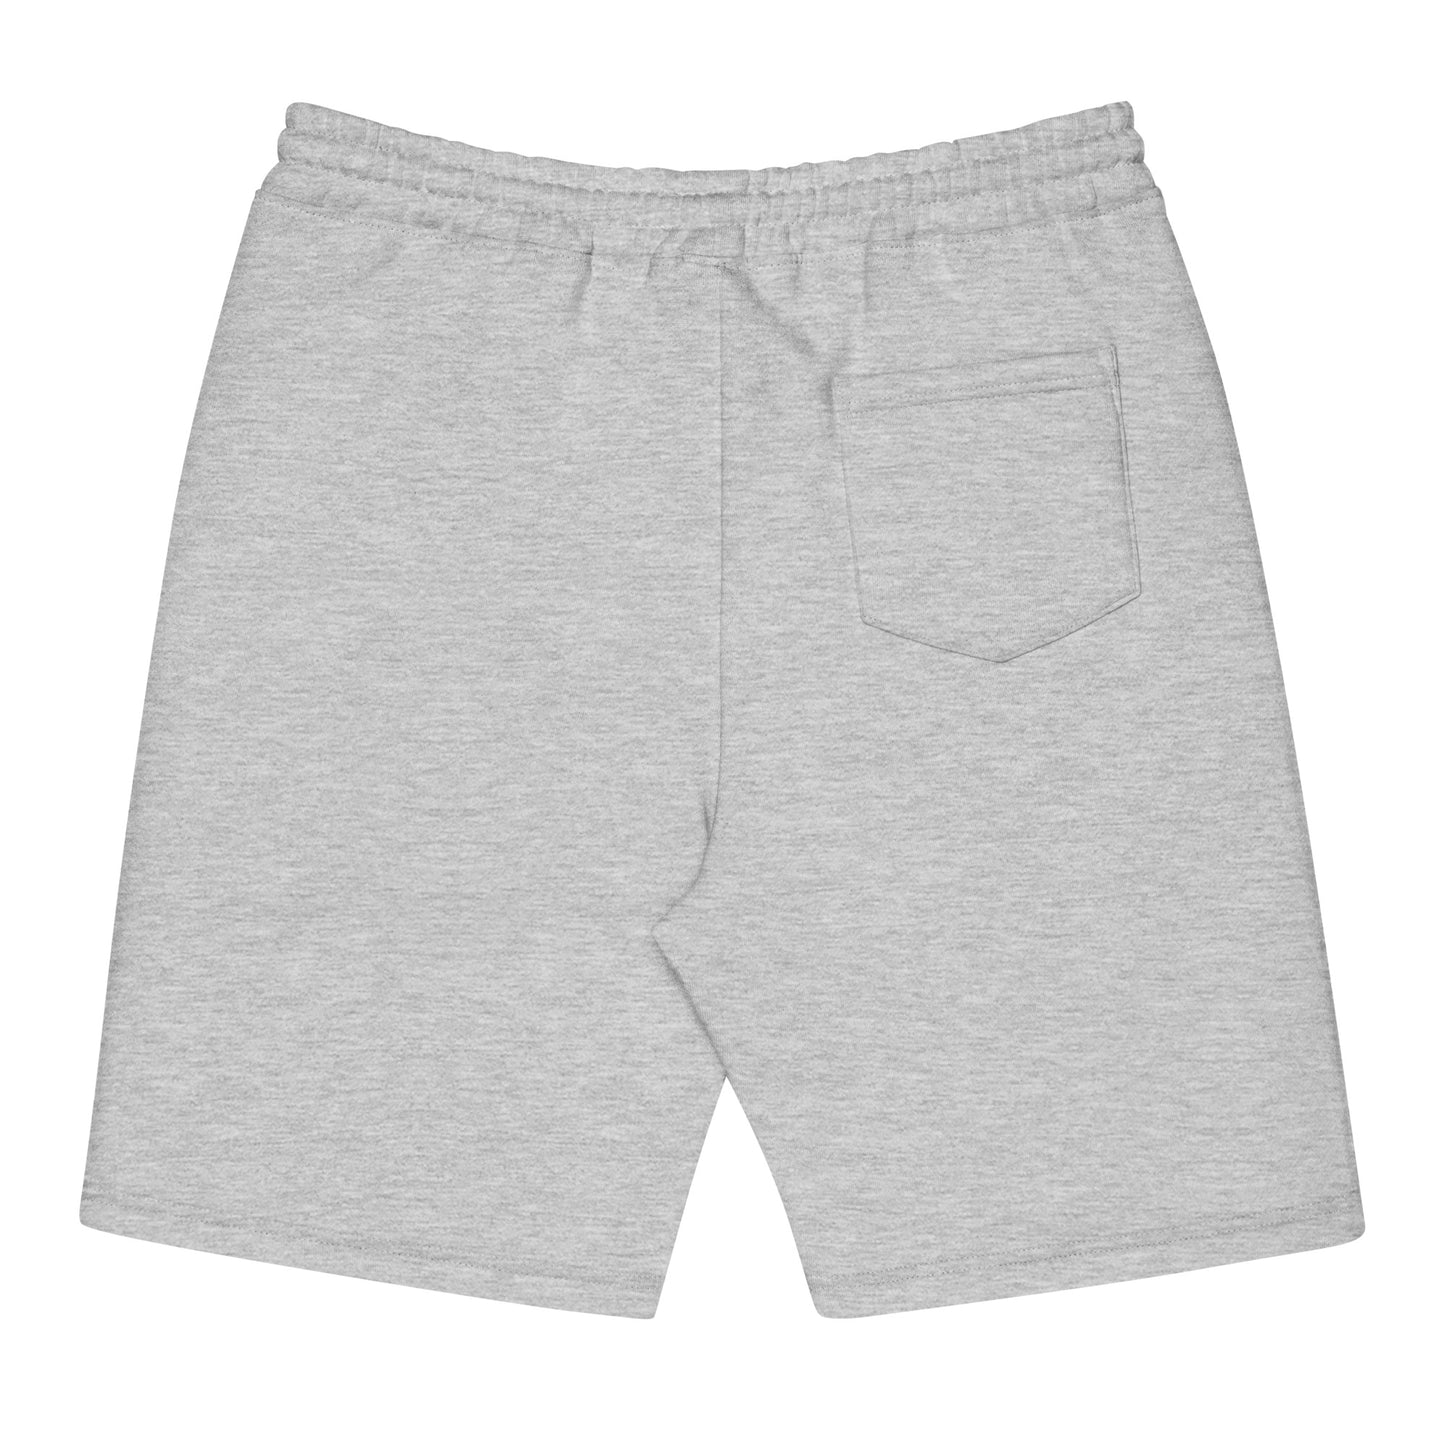 Varsity REHH - Men's fleece shorts (Grey)